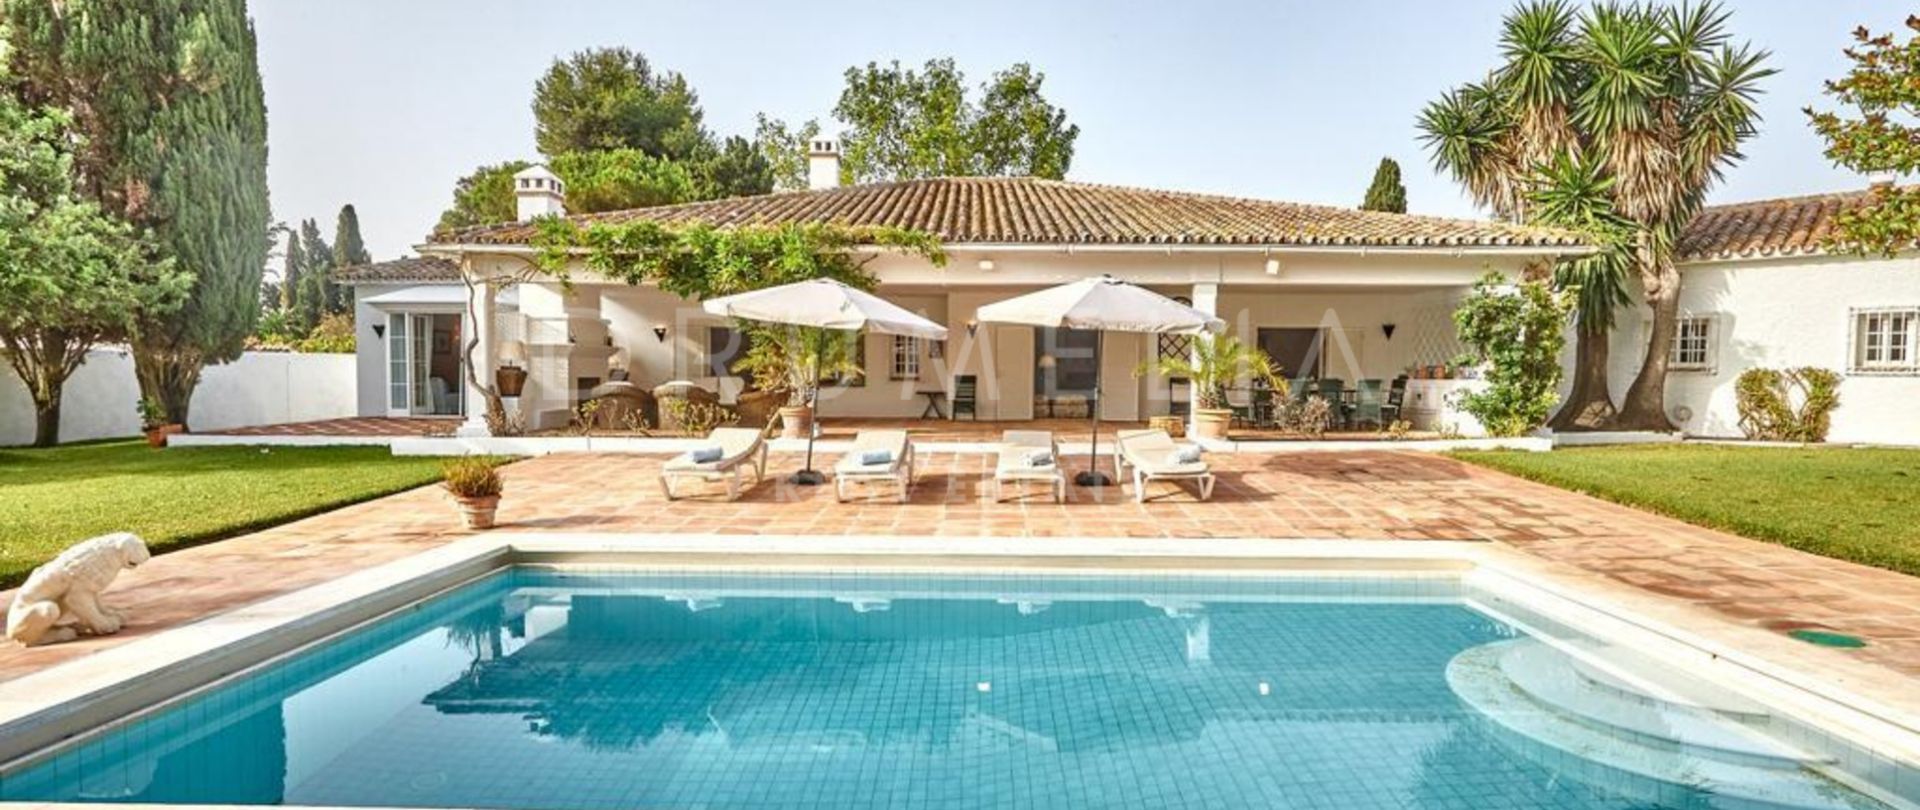 Classic Andalusian-style luxury villa close to the beach for sale in beautiful Casasola, Estepona